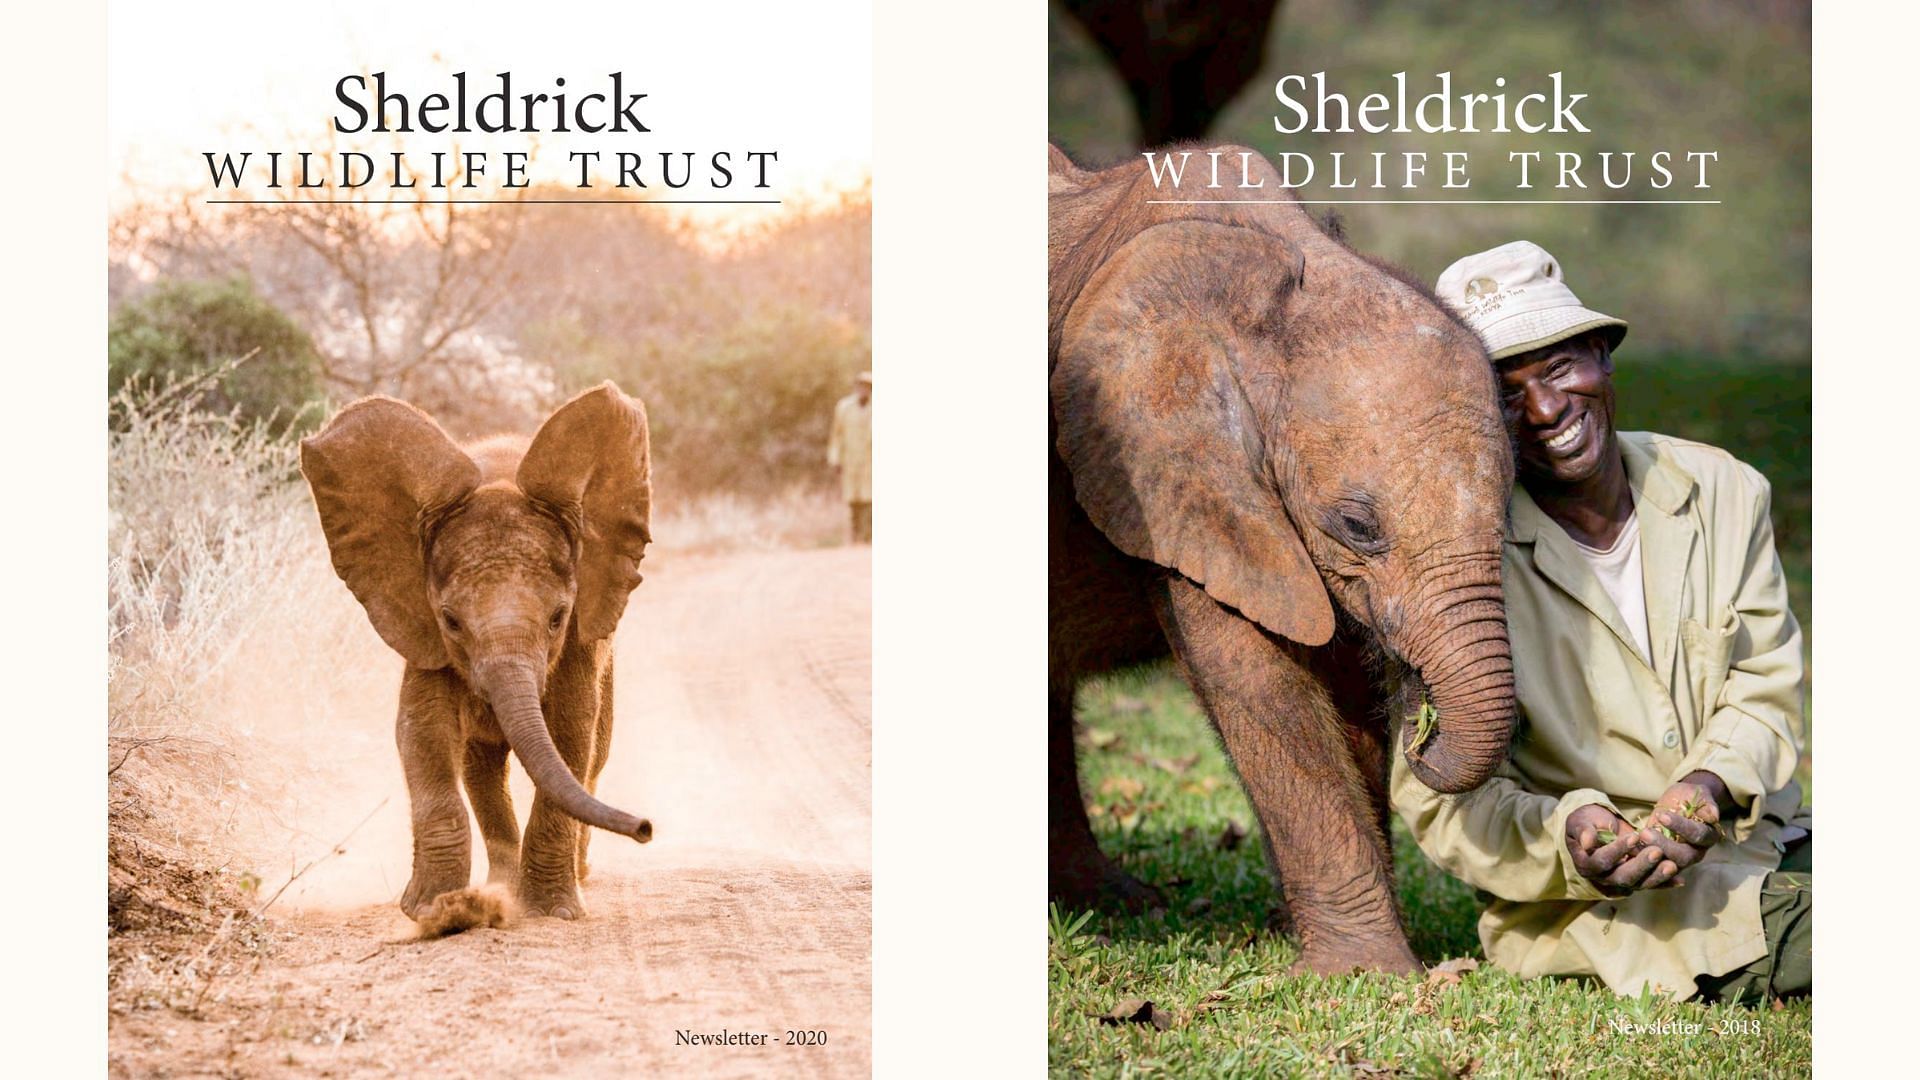 Sheldrick Trust aims to rescue and rehabilitate wildlife (Image via sheldrickwildlifetrust.org)